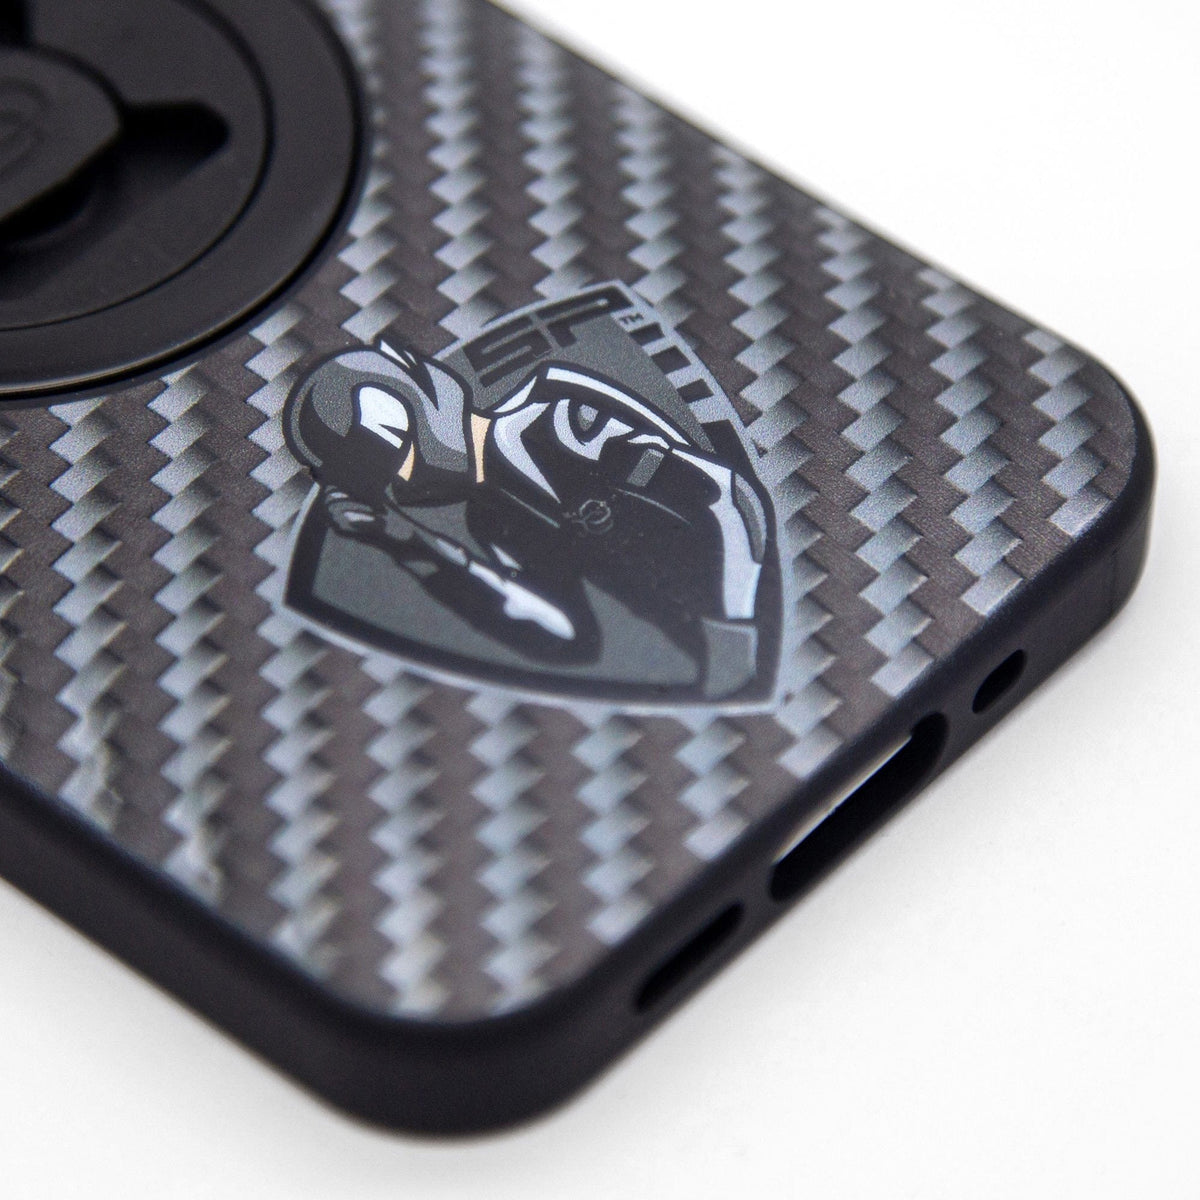 Edition Phone Case - Carbon Rider (Grey)